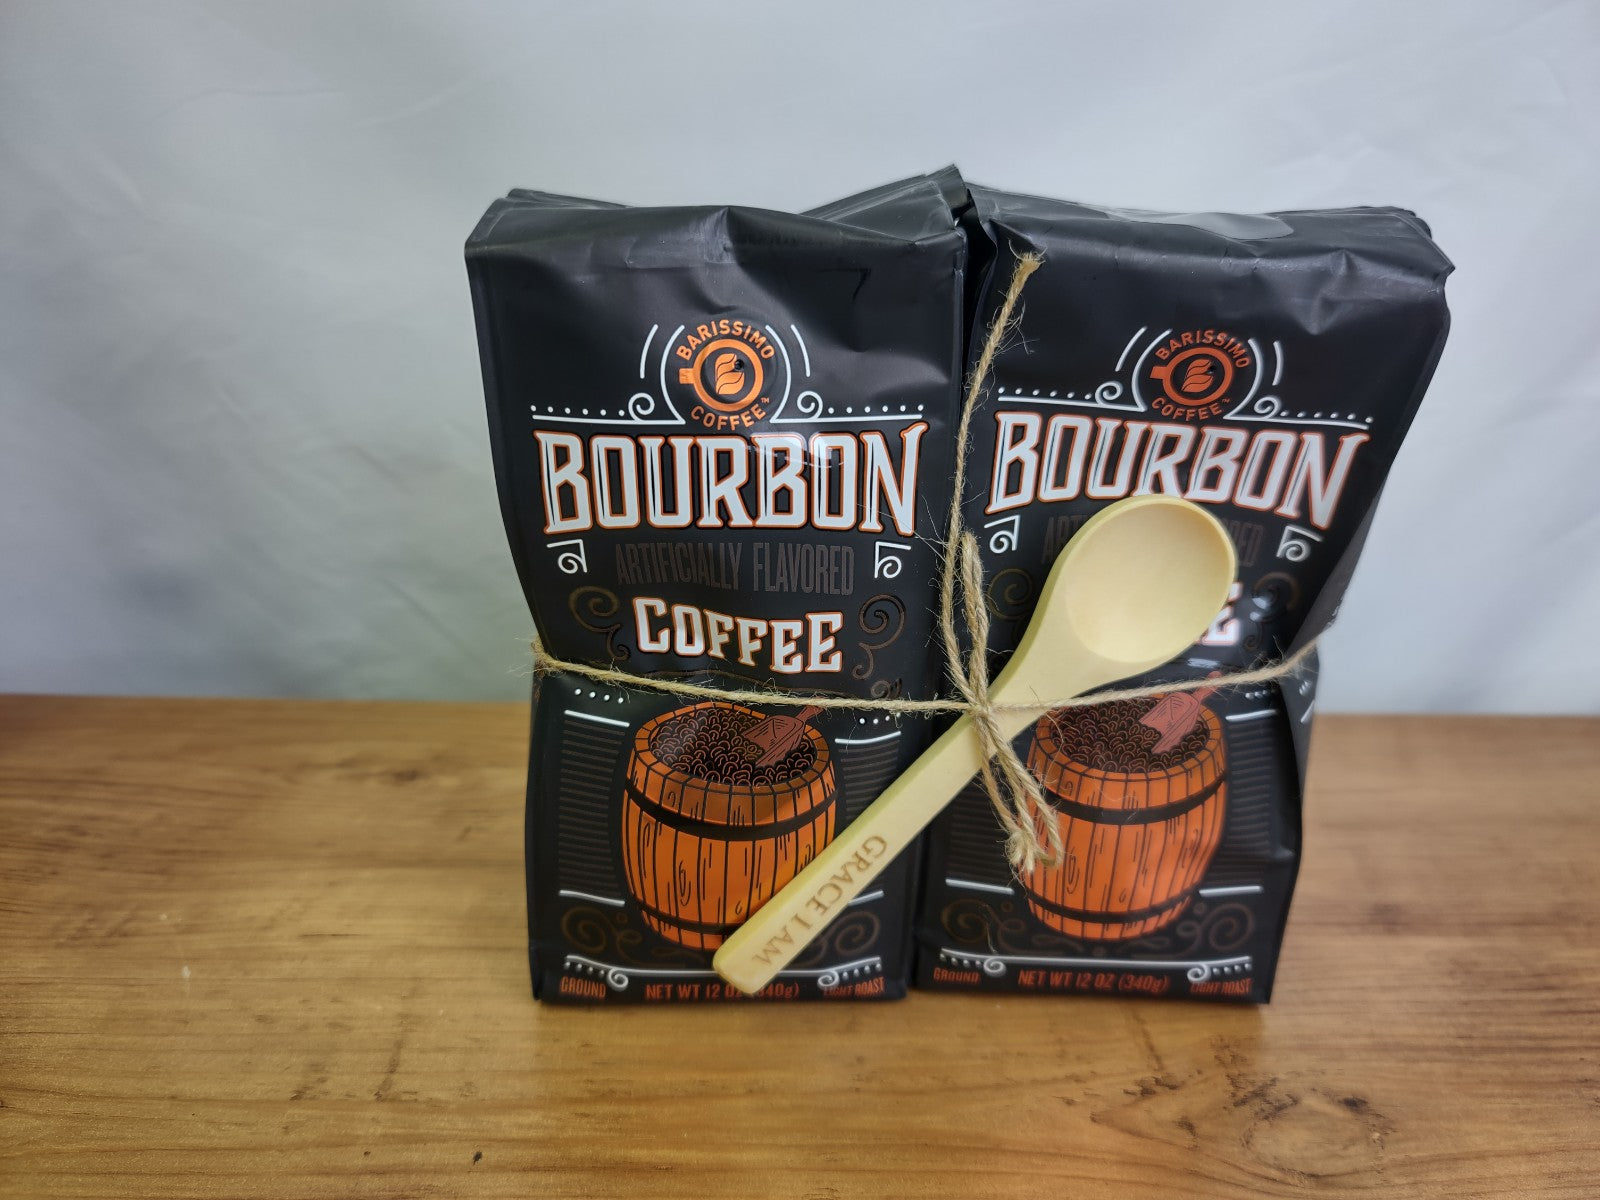 Gran Espresso Premium Bourbon Ground Coffee